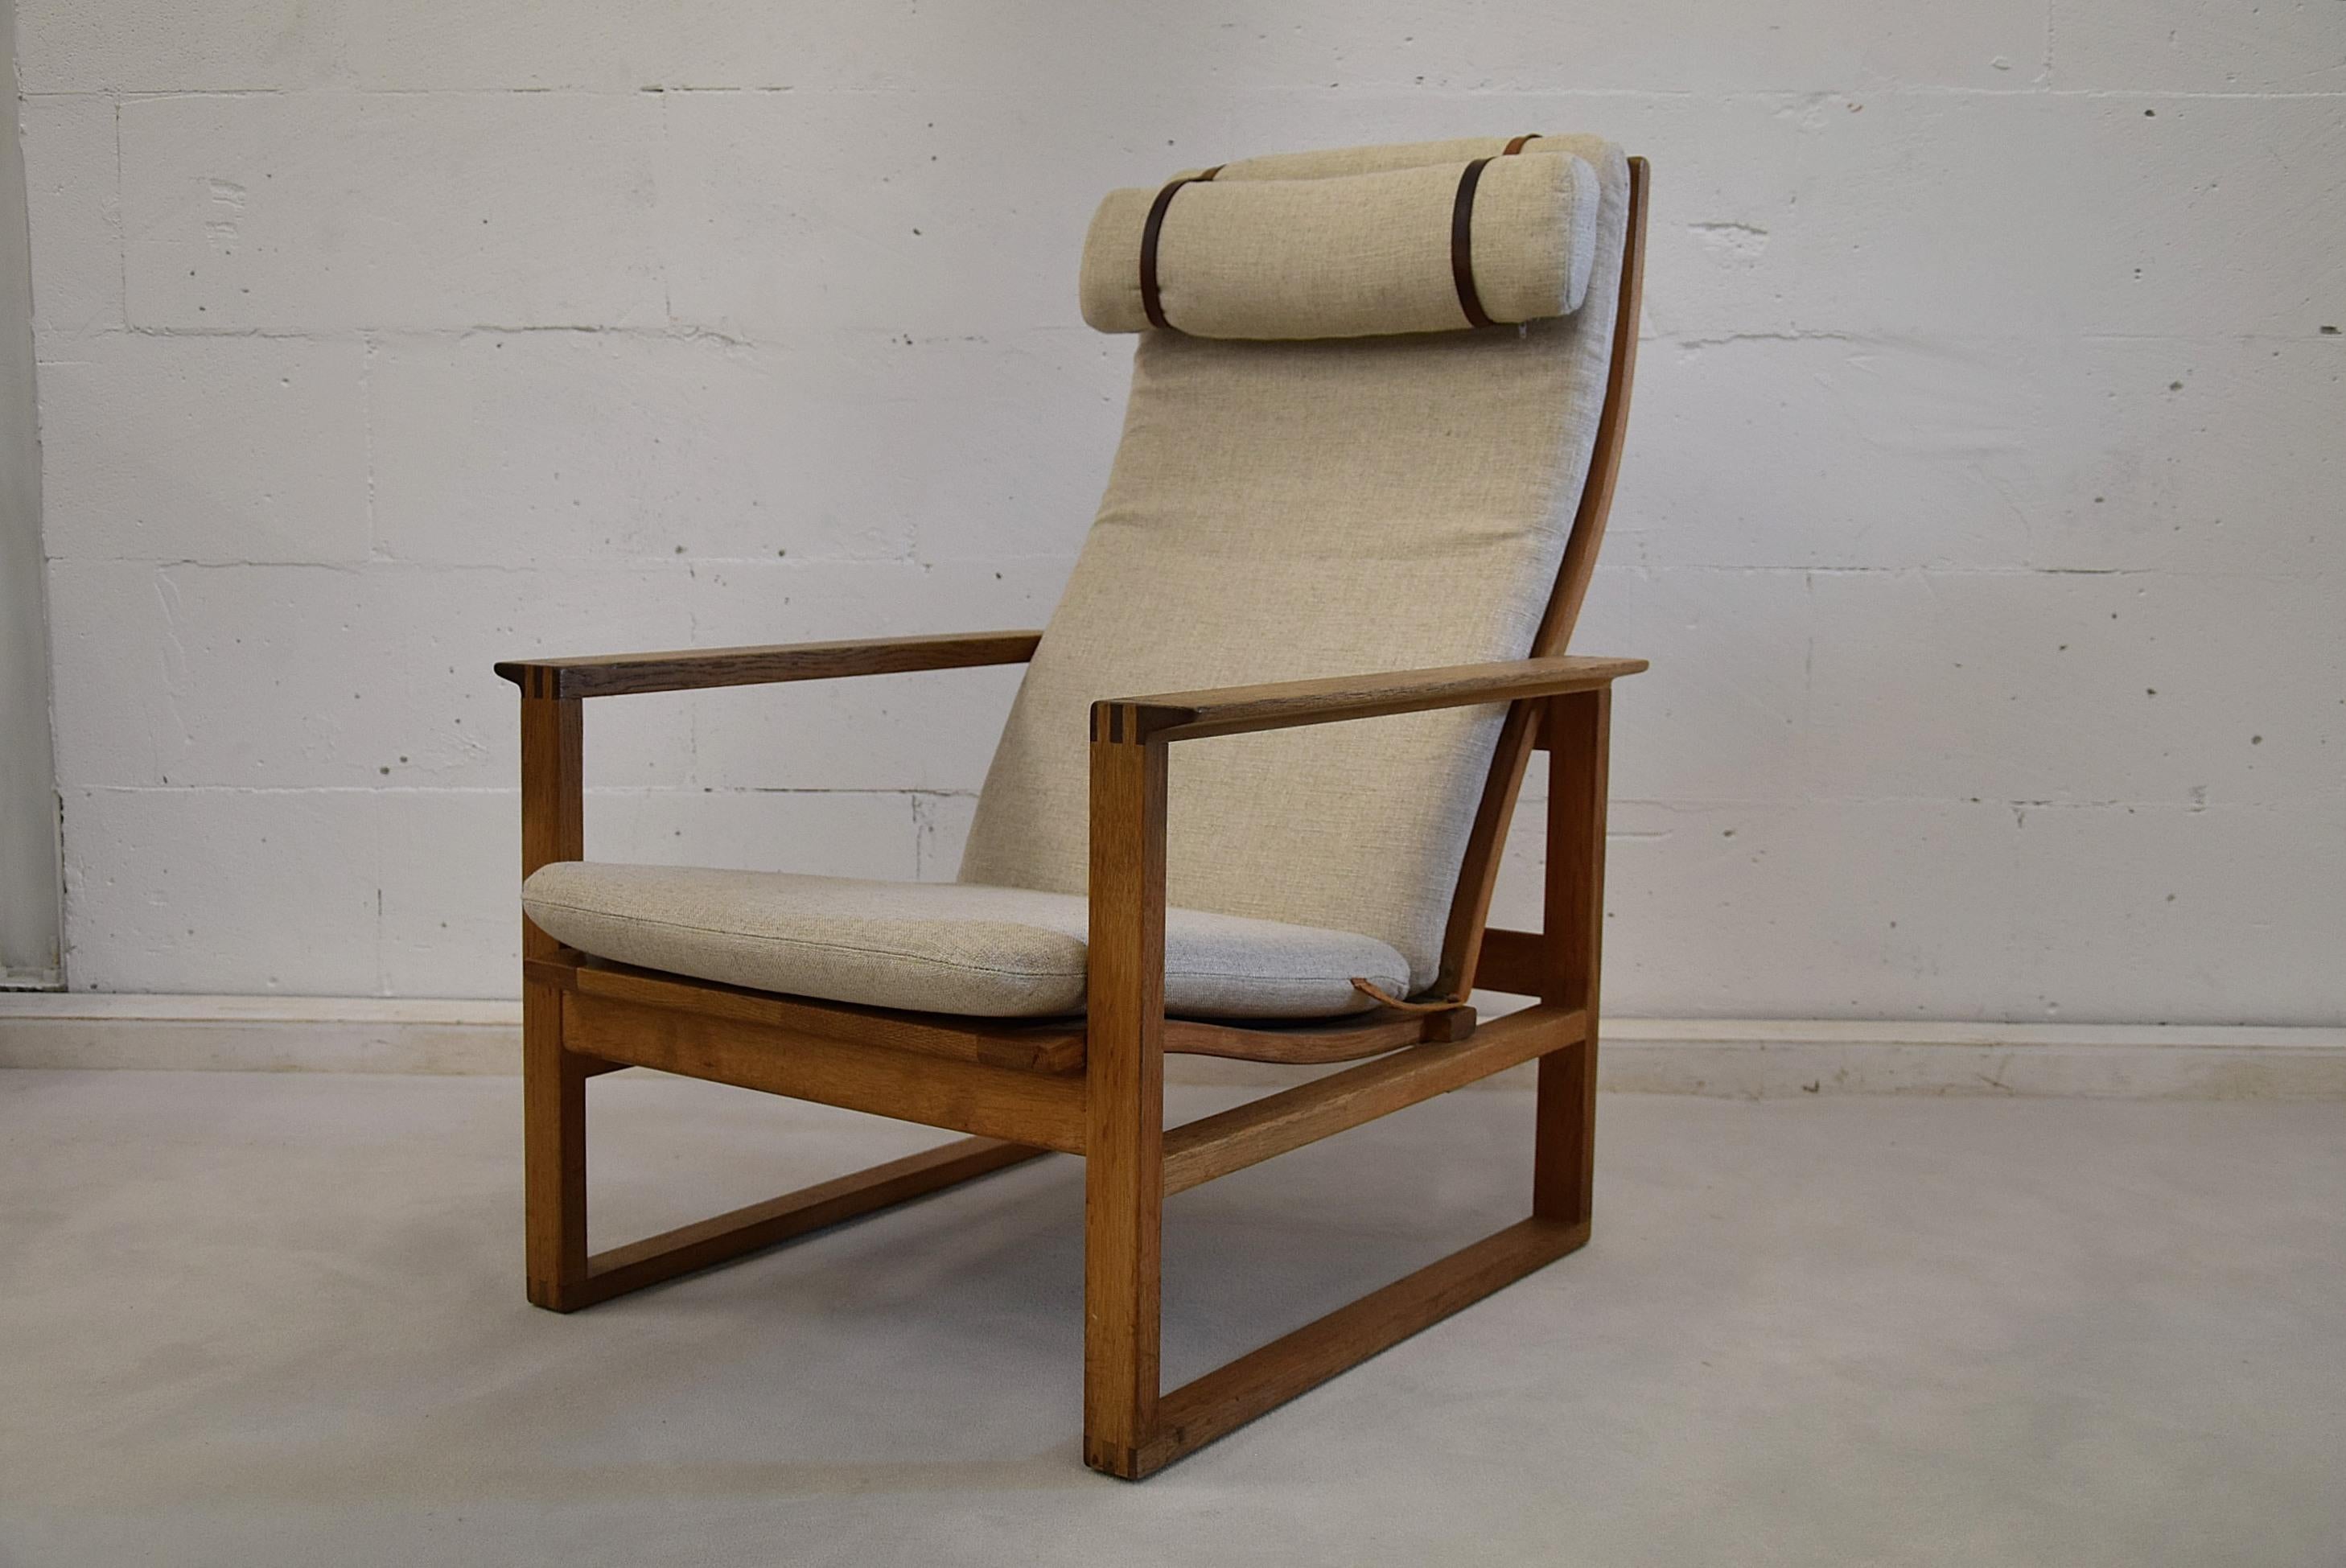 Danish Mid century modern scandinavian oak lounge chair by Børge Mogensen